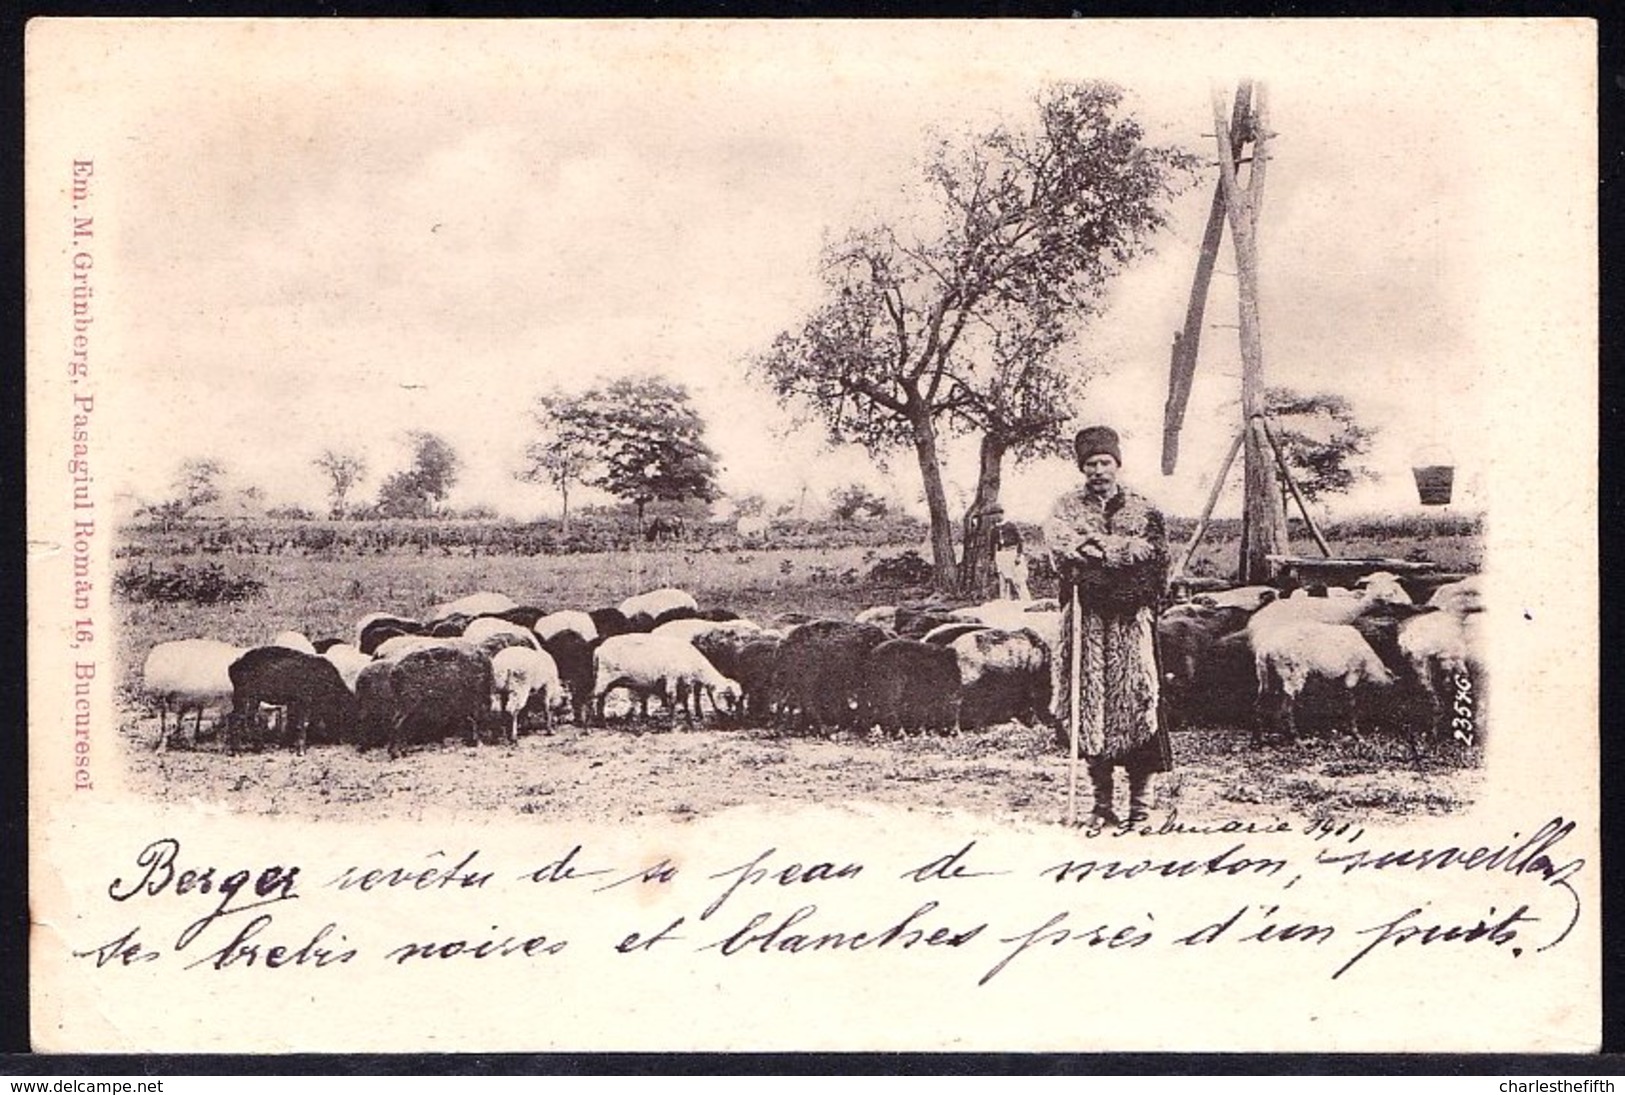 1901 ROMANIAN CPA ** SHEPHERD WITH SHEEP - BERGER AVEC MOUTON ** édit. Em. M. Grünberg - Bucuresci - Roumanie